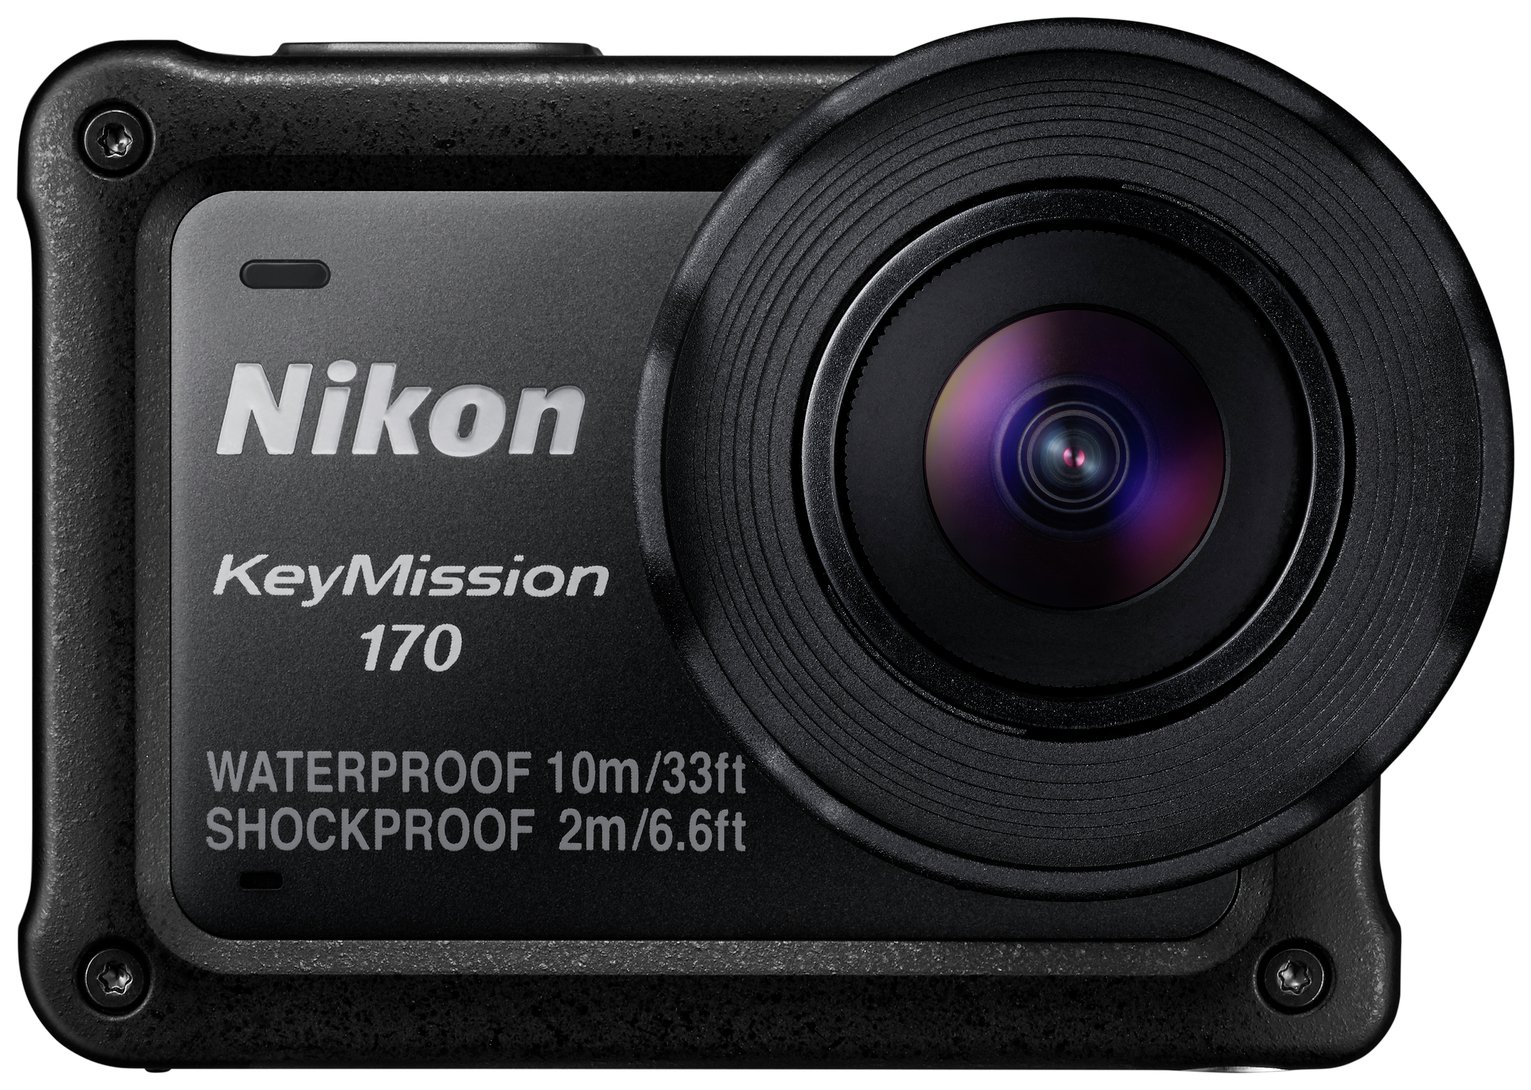 Nikon Keymission 170 4K Action Camera review